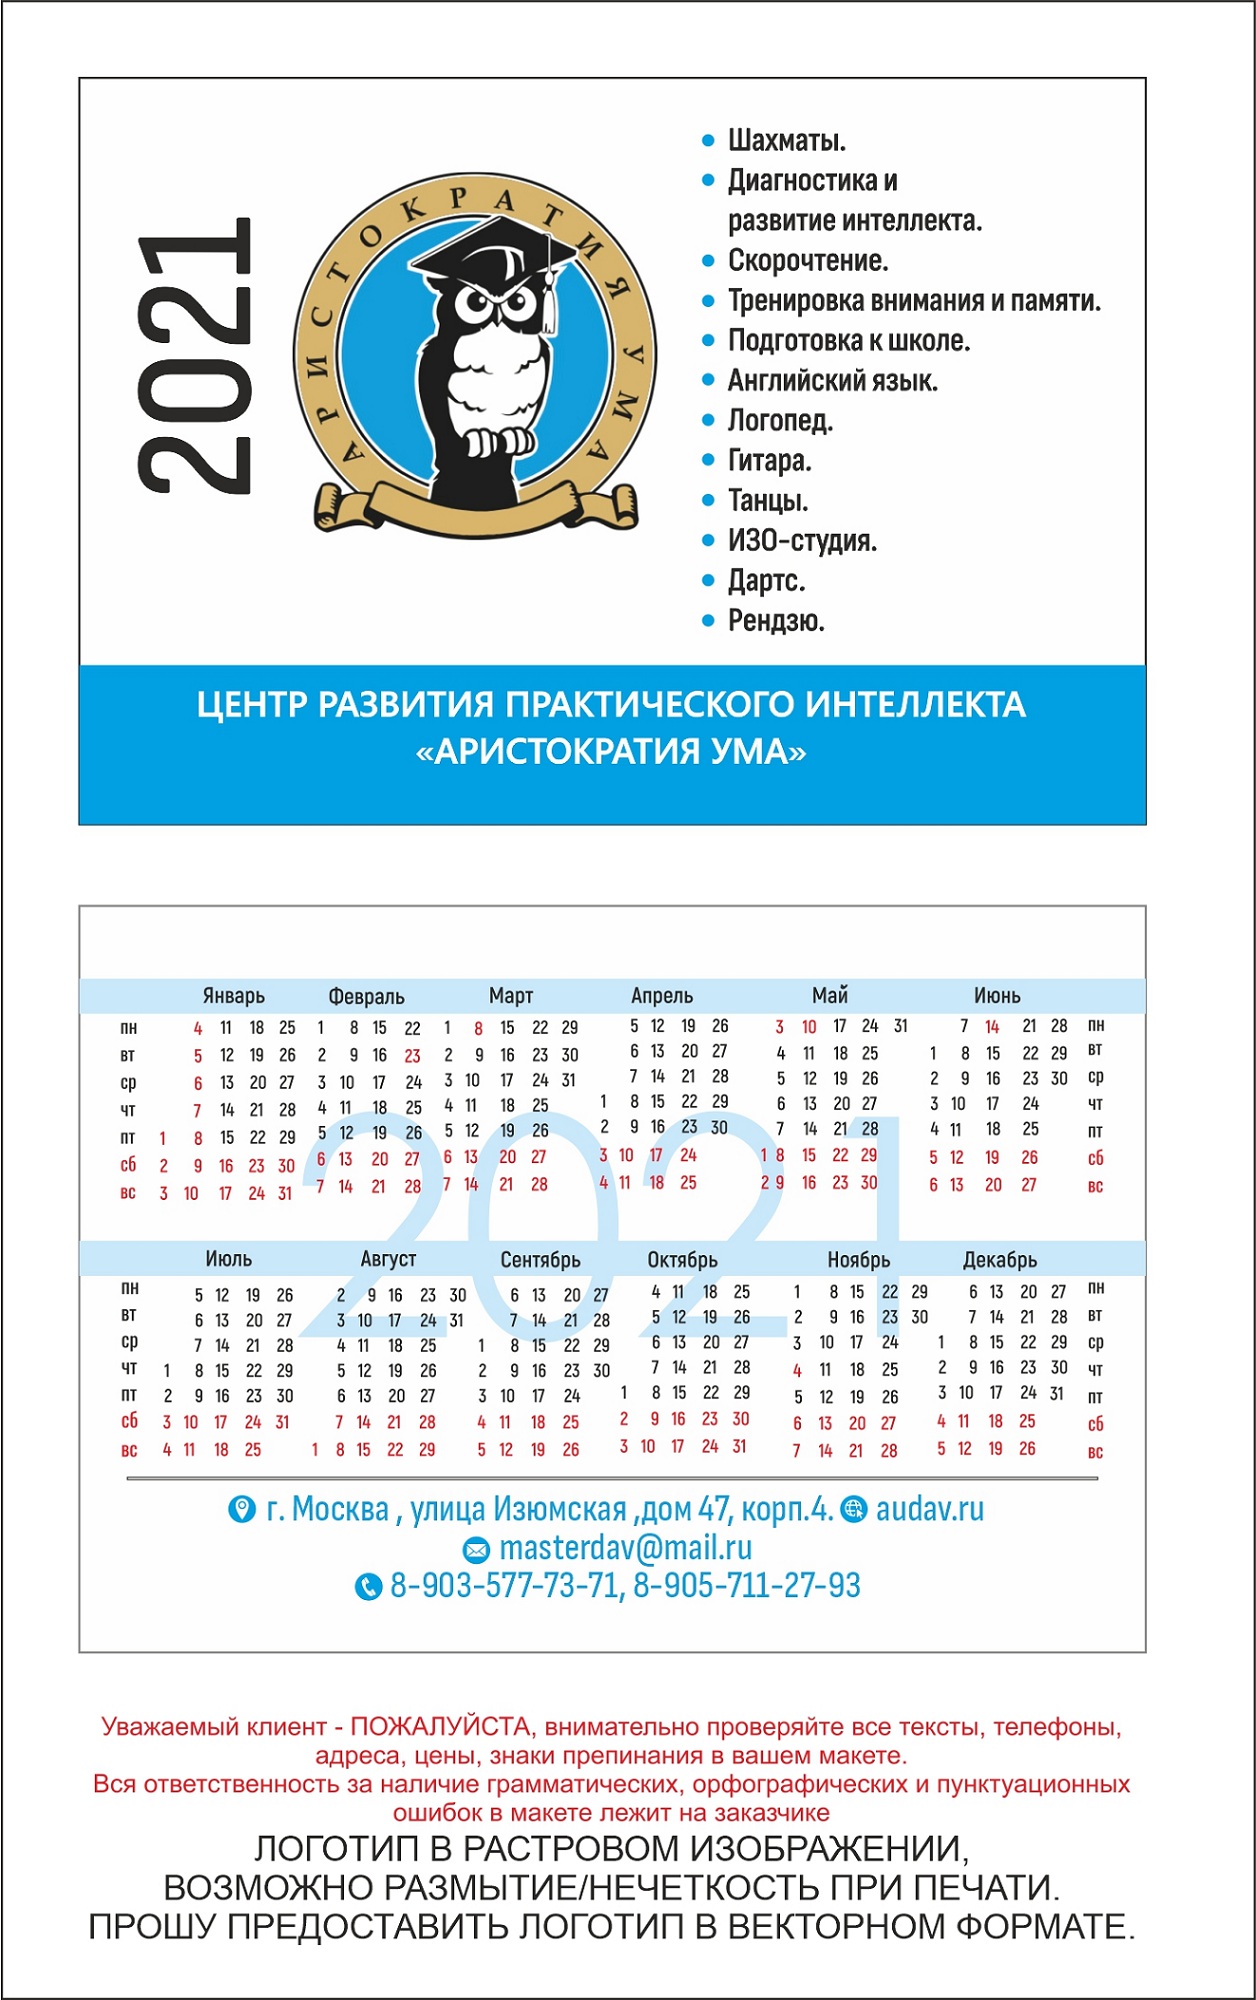 Фирменный календарь